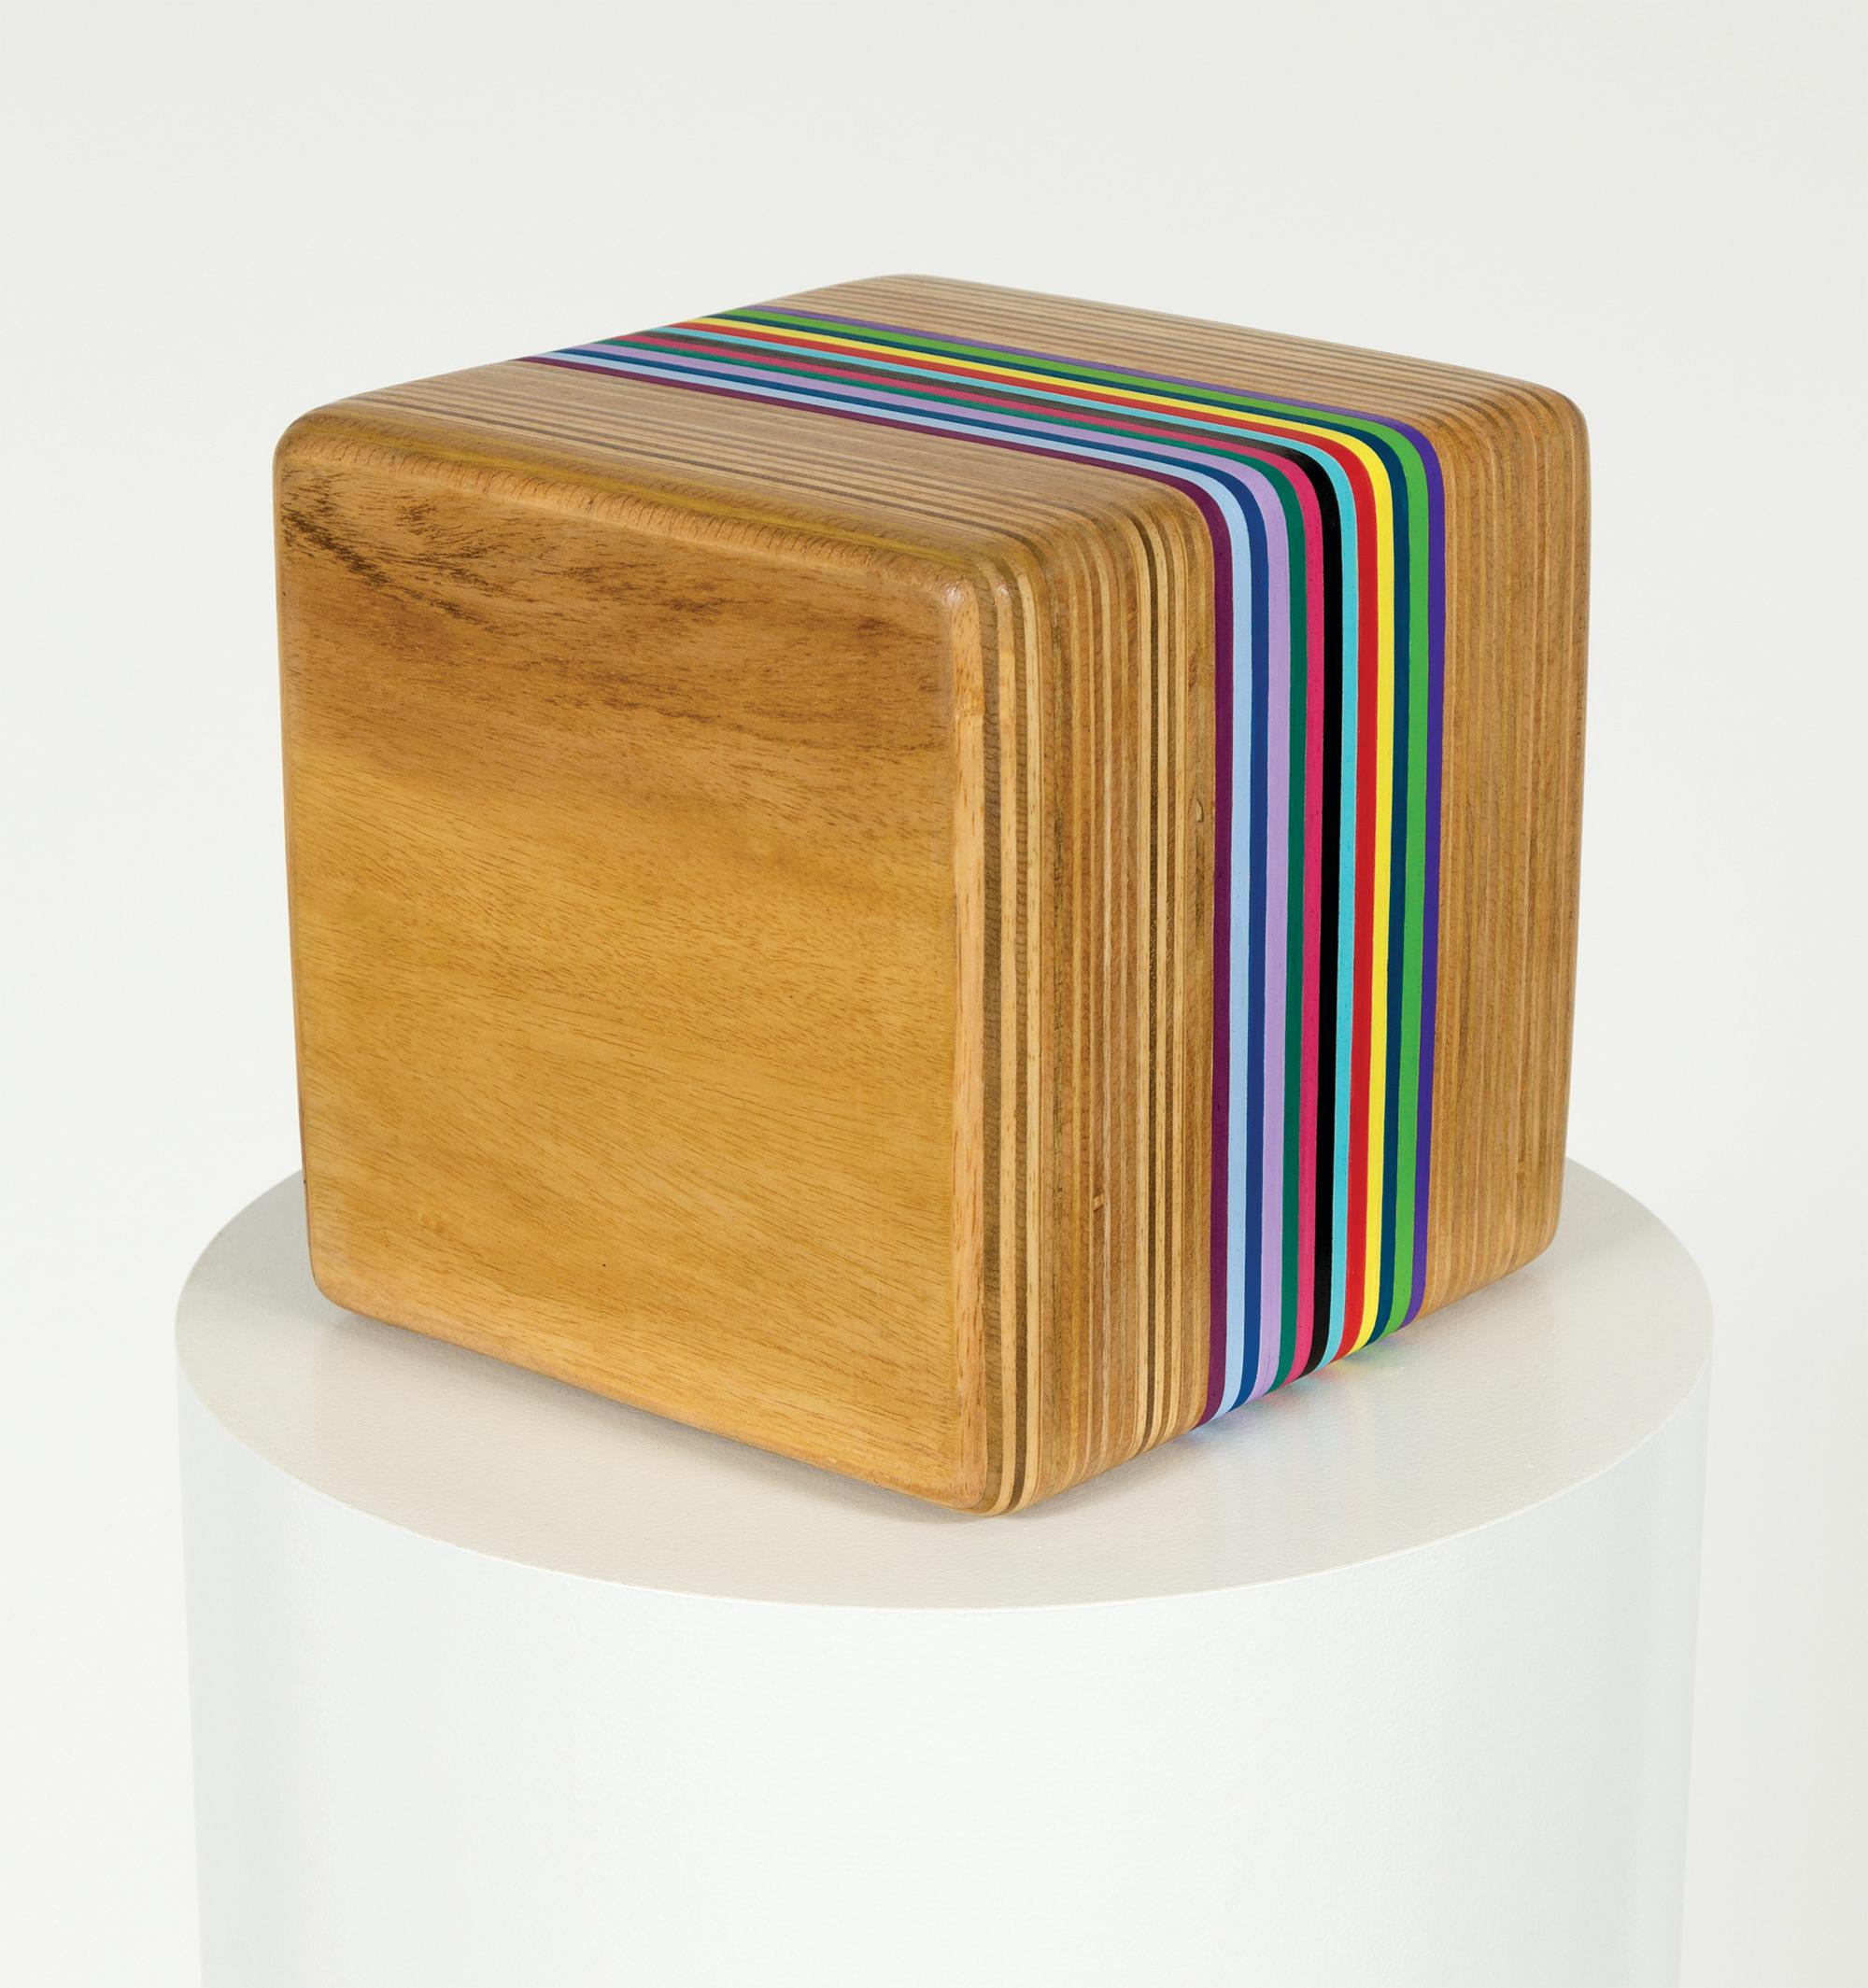 Medium Cube - Sculpture by Mark Knoerzer